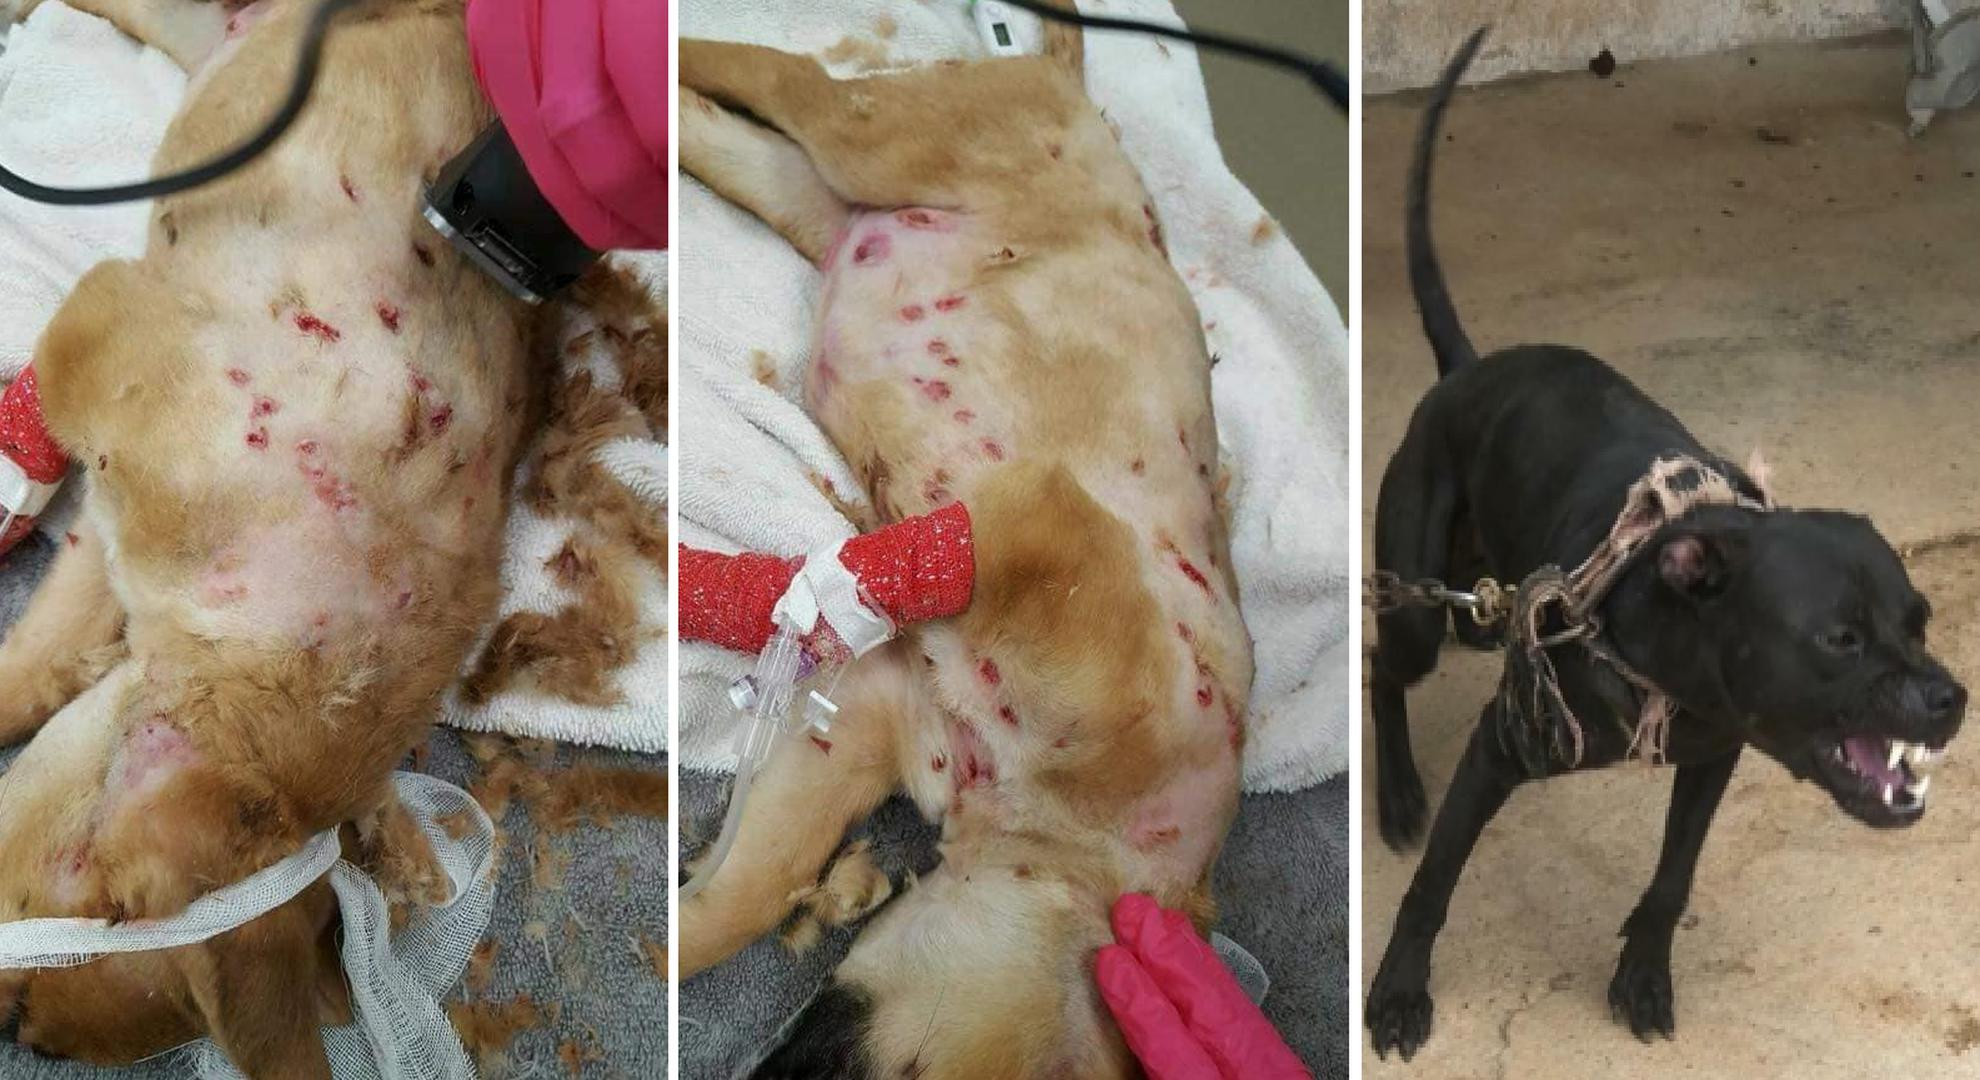 Sparring canino en Lima: roban animales para usarlos para entrenar a perros de pelea | TESTIMONIOS